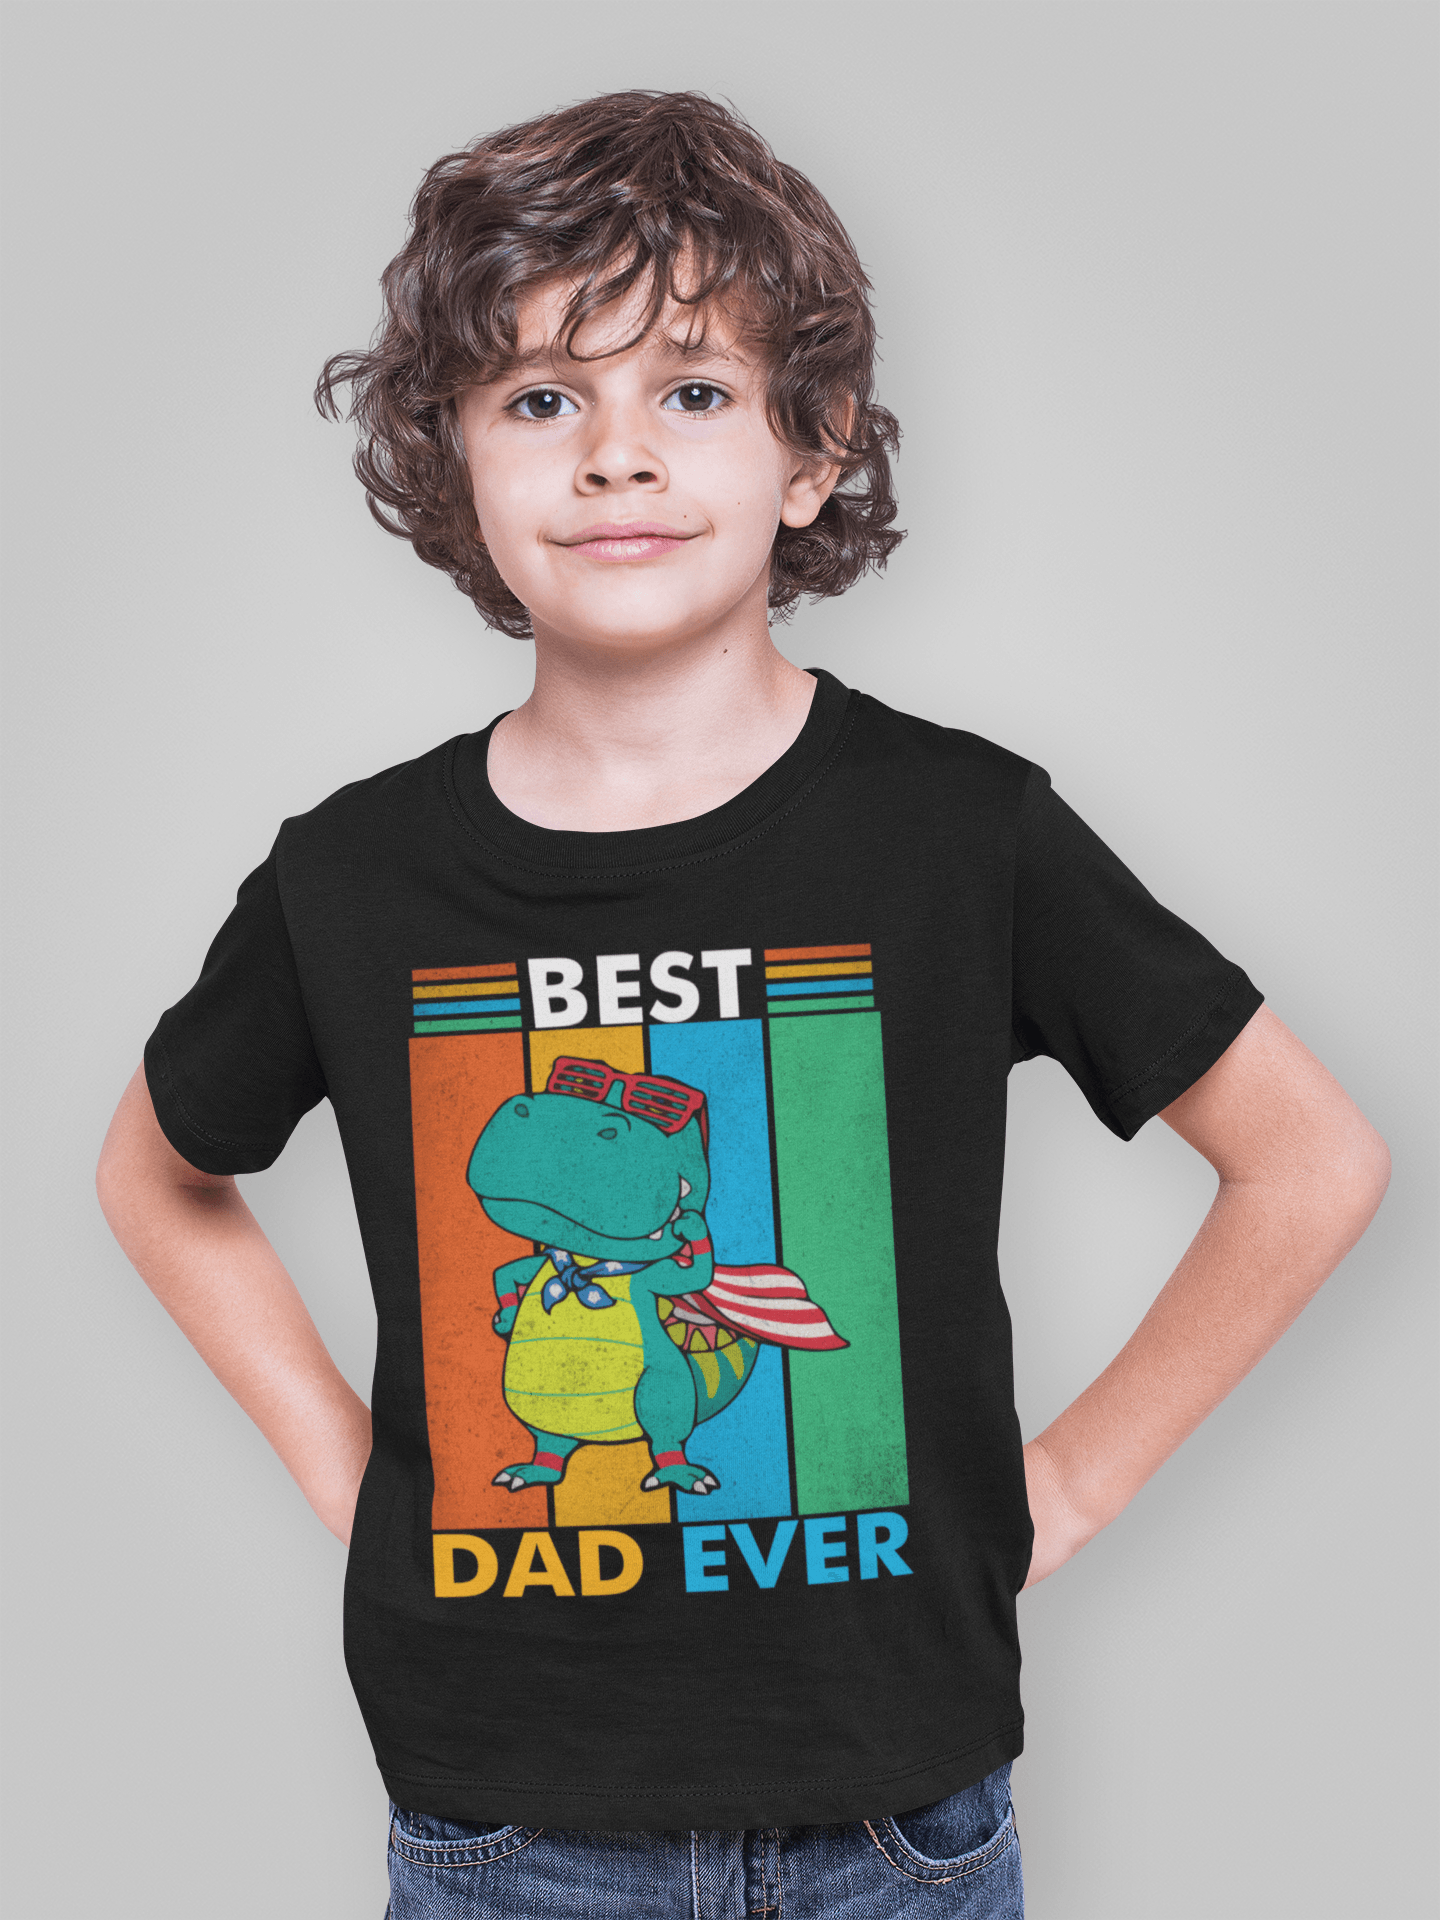 Best Dad Ever Black T-Shirt For Boys - ATOM